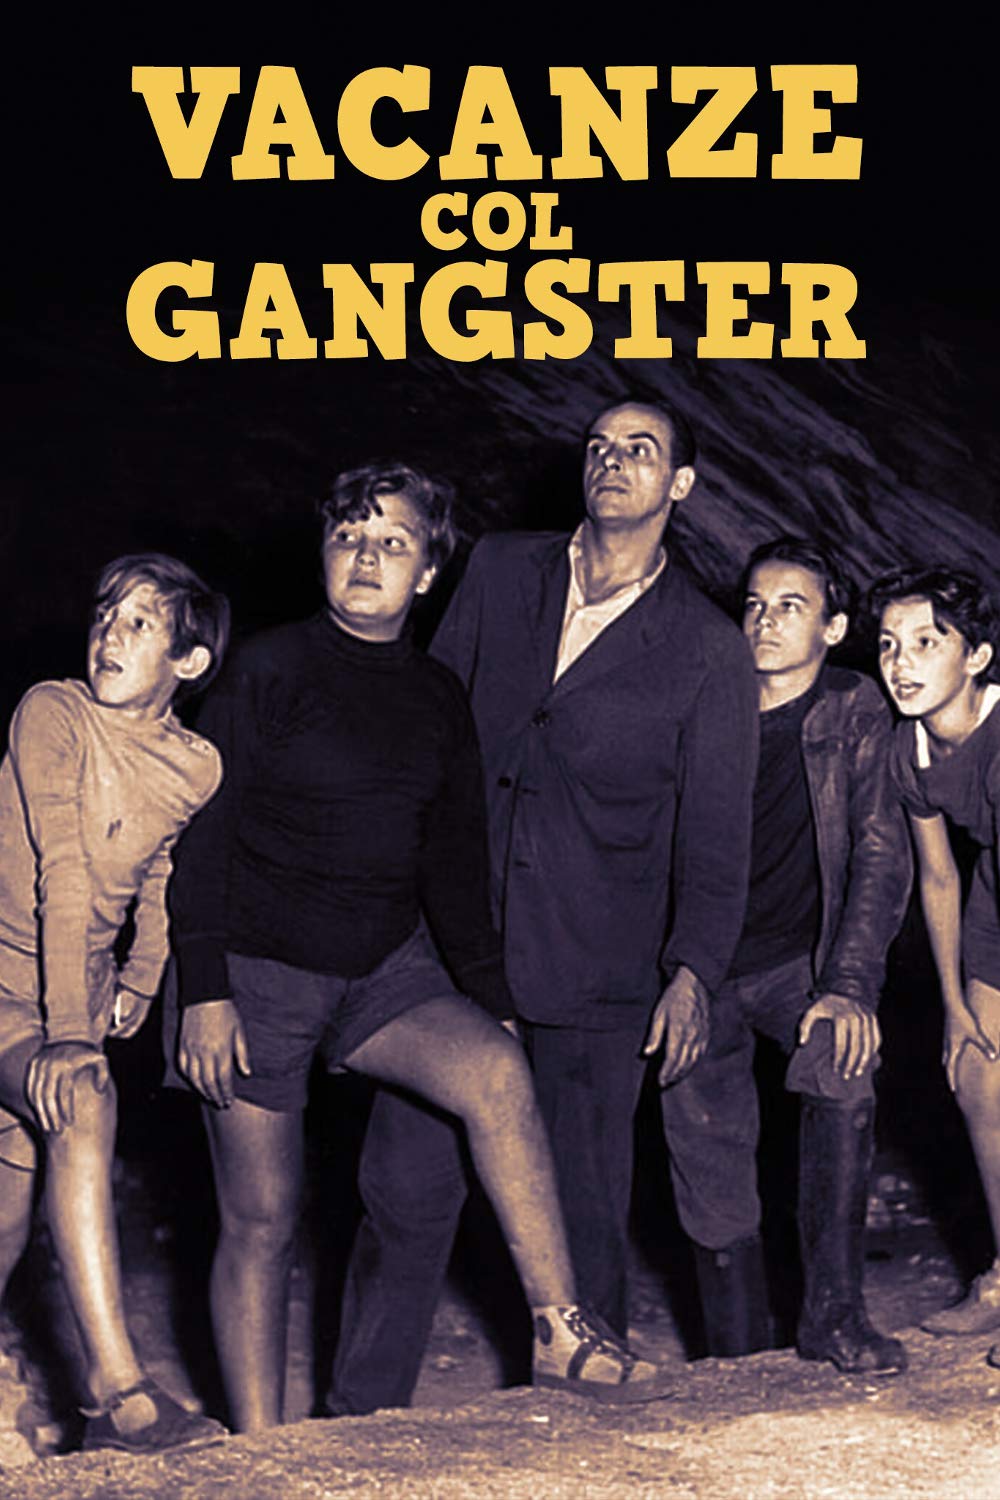 Vacanze col gangster [B/N] (1952)